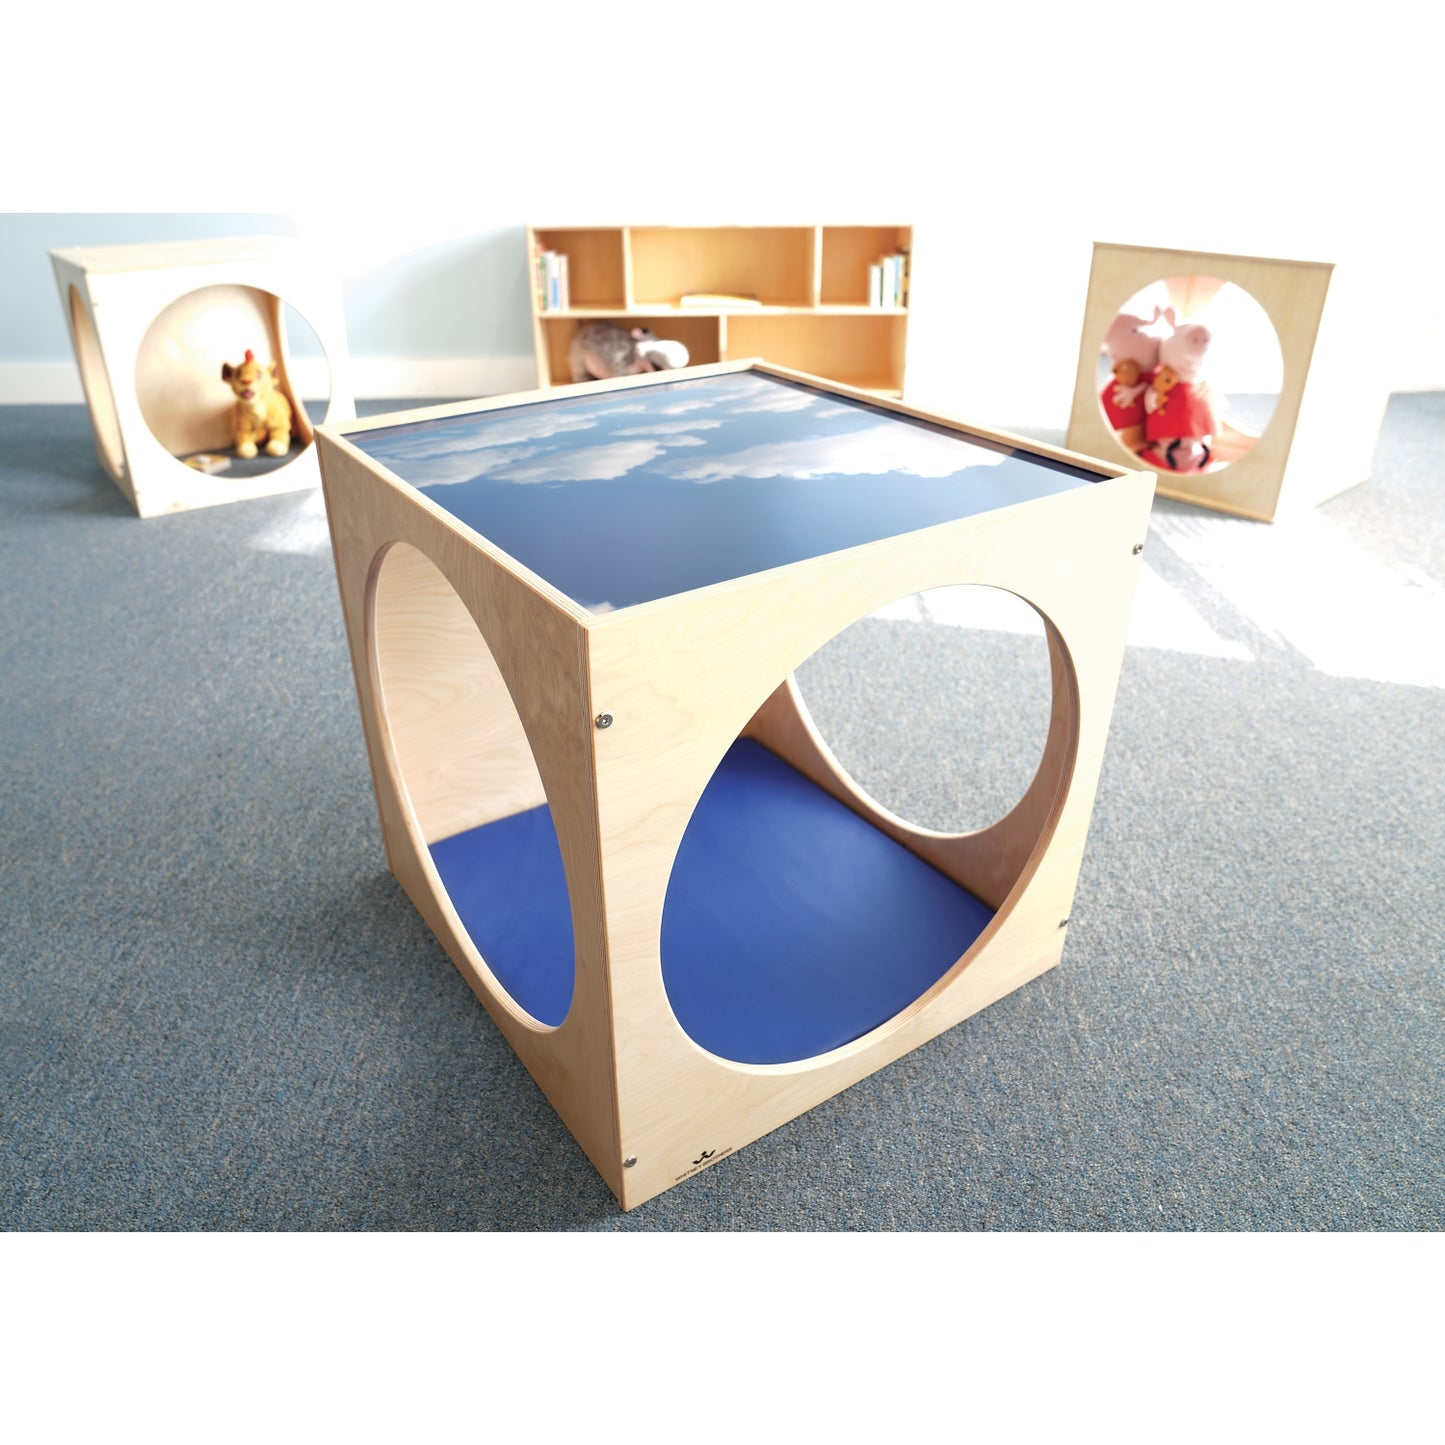 Toddler Acrylic Sky Top Play Cube With Mat